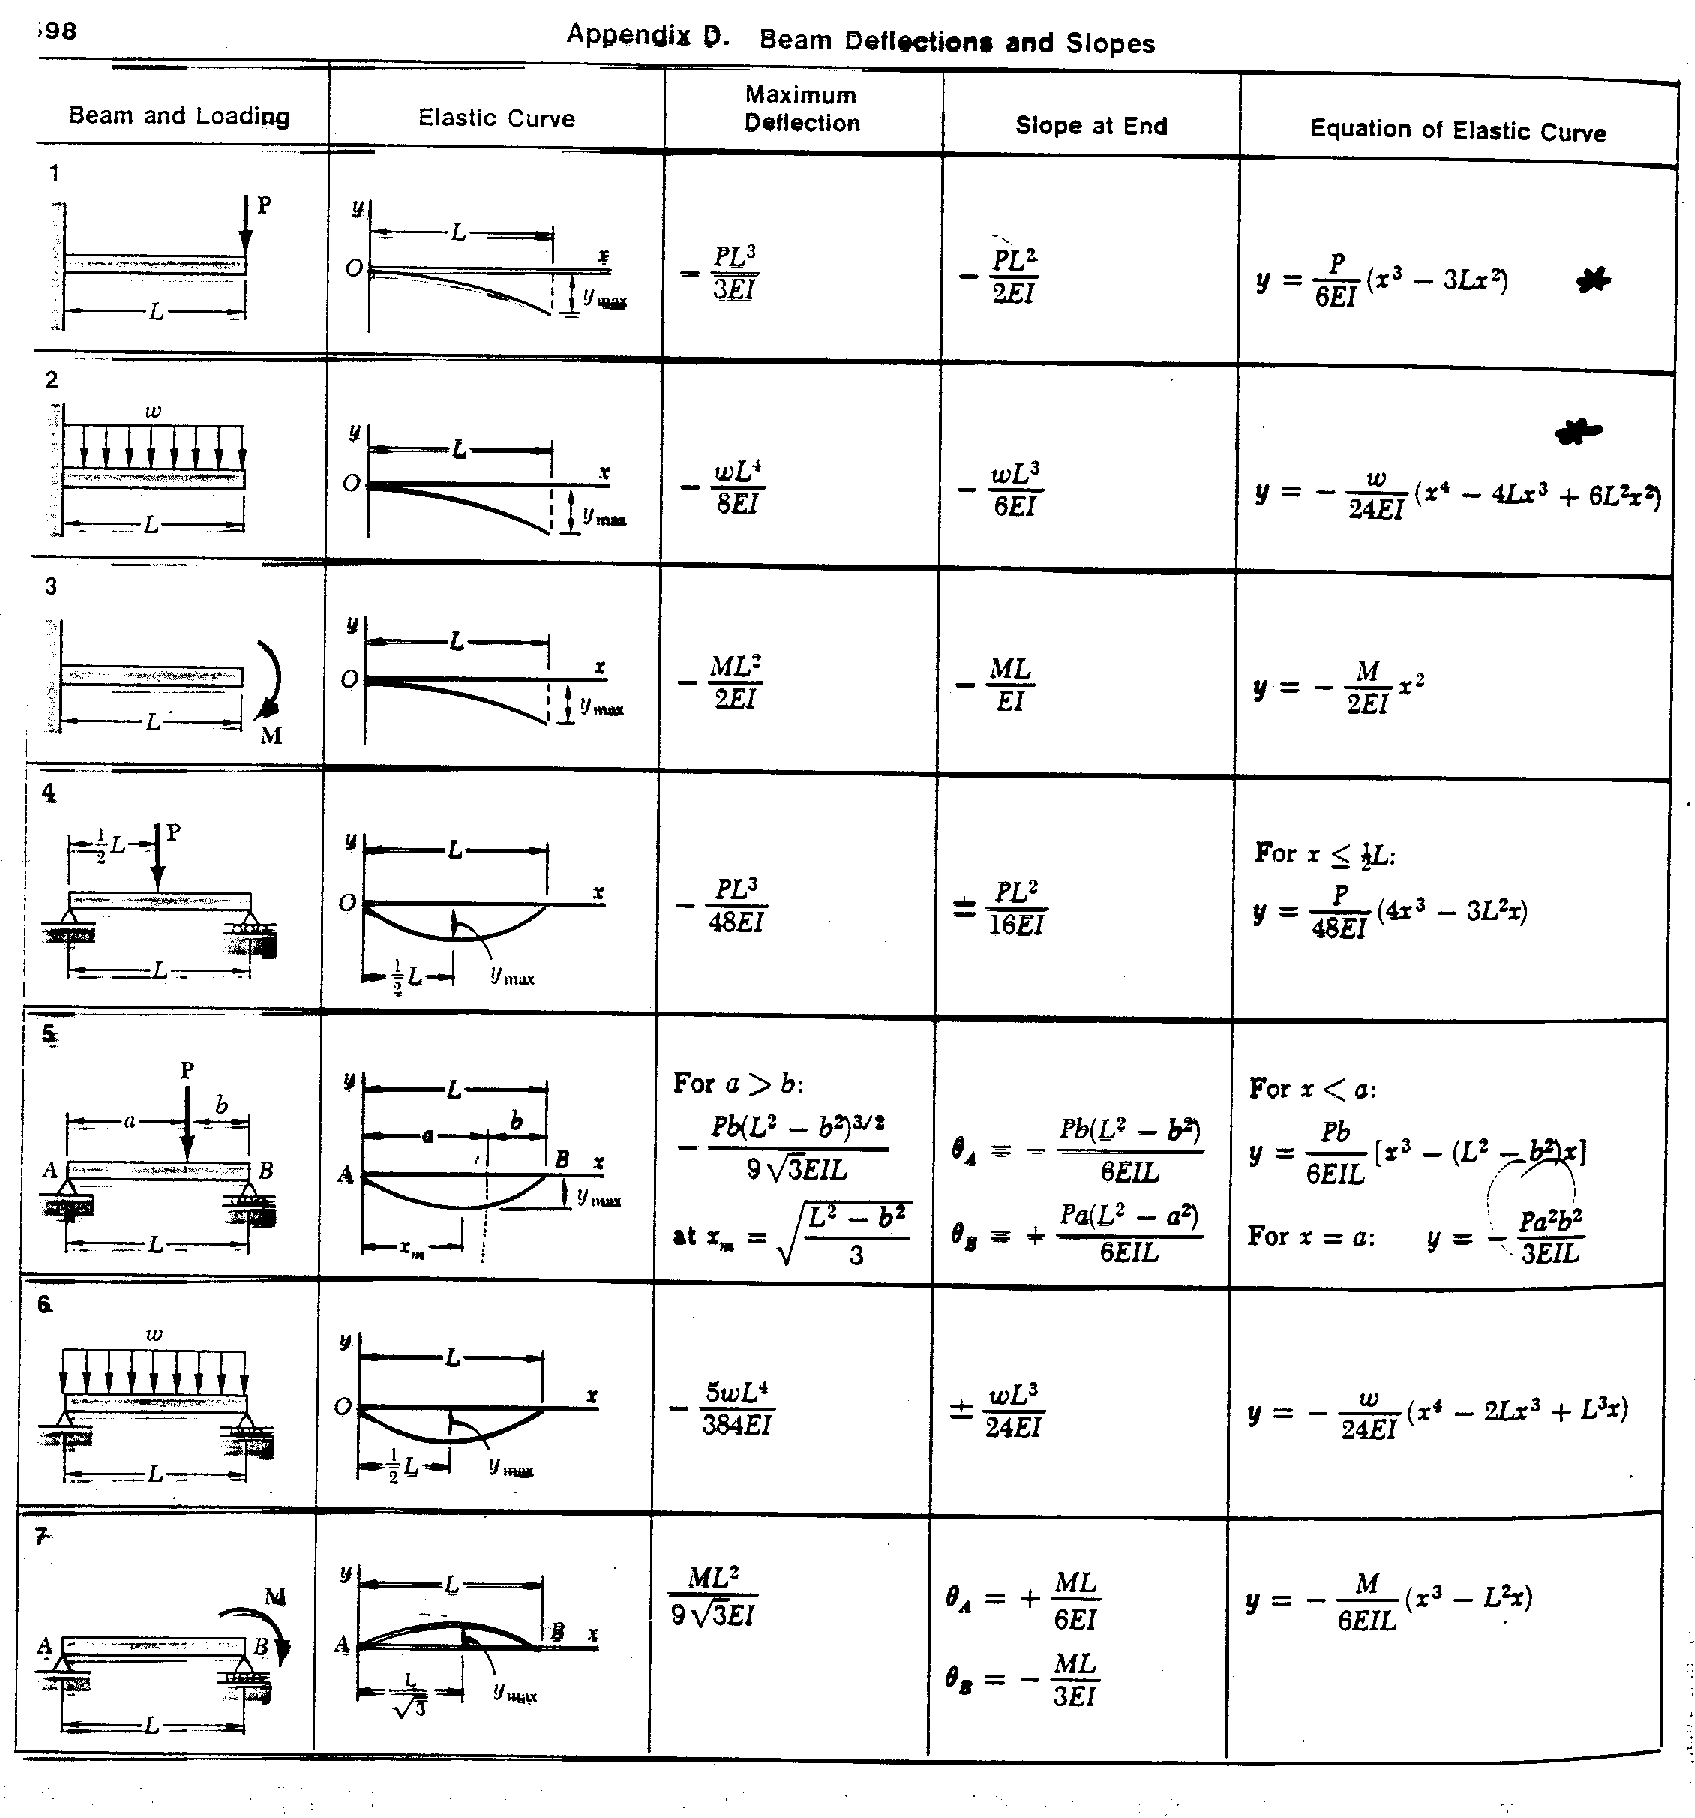 [DIAGRAM] Steel Manual Beam Diagrams And Formulas - MYDIAGRAM.ONLINE